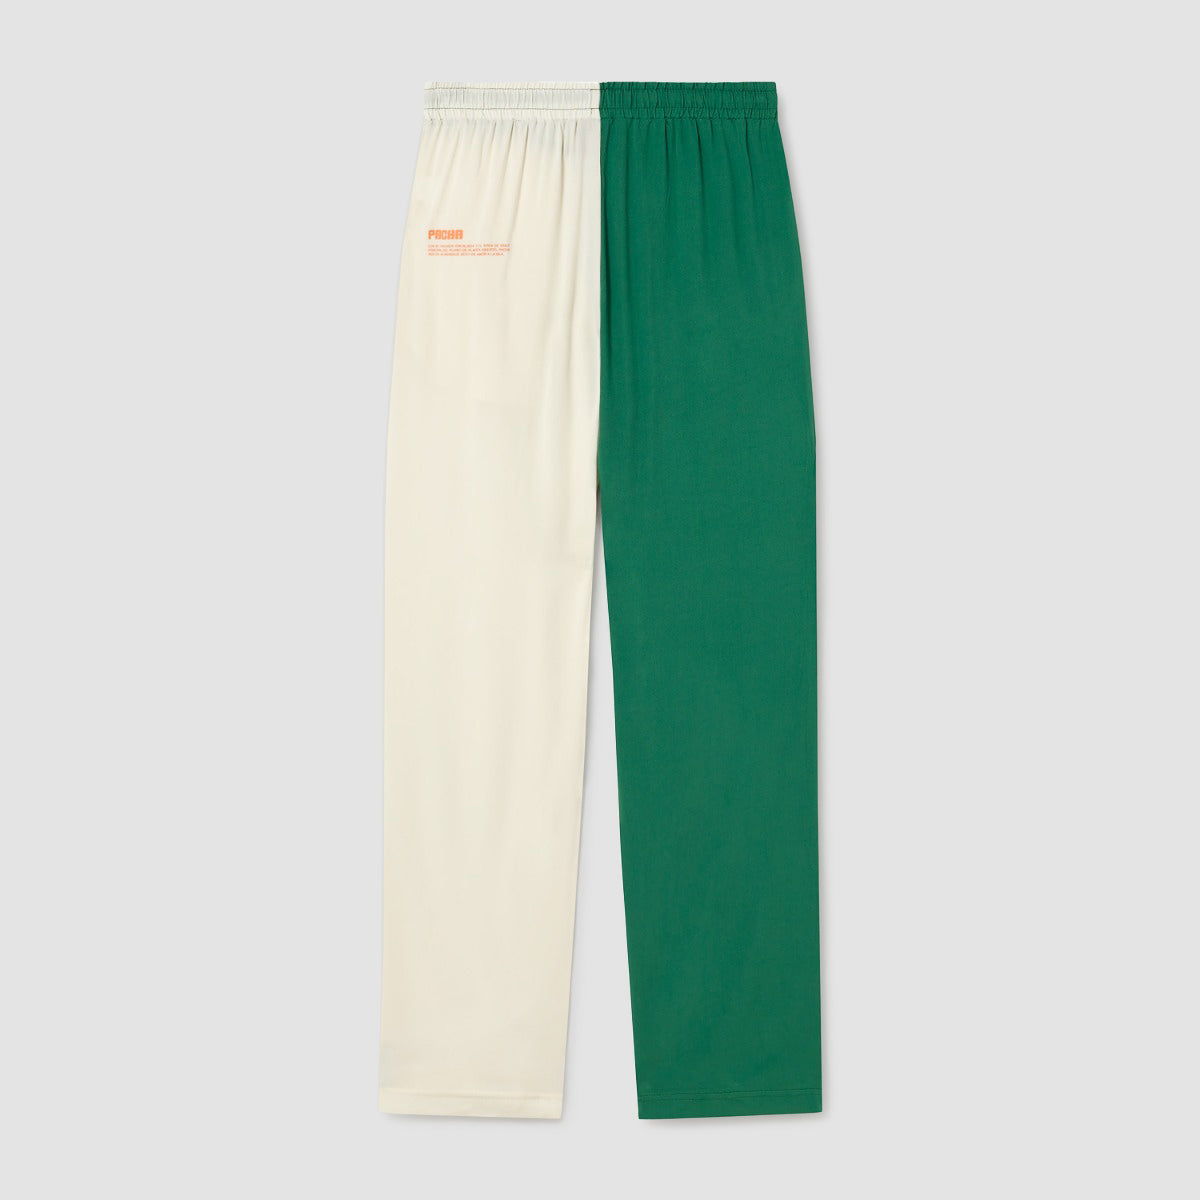 Pantalon vert et blanc 1973